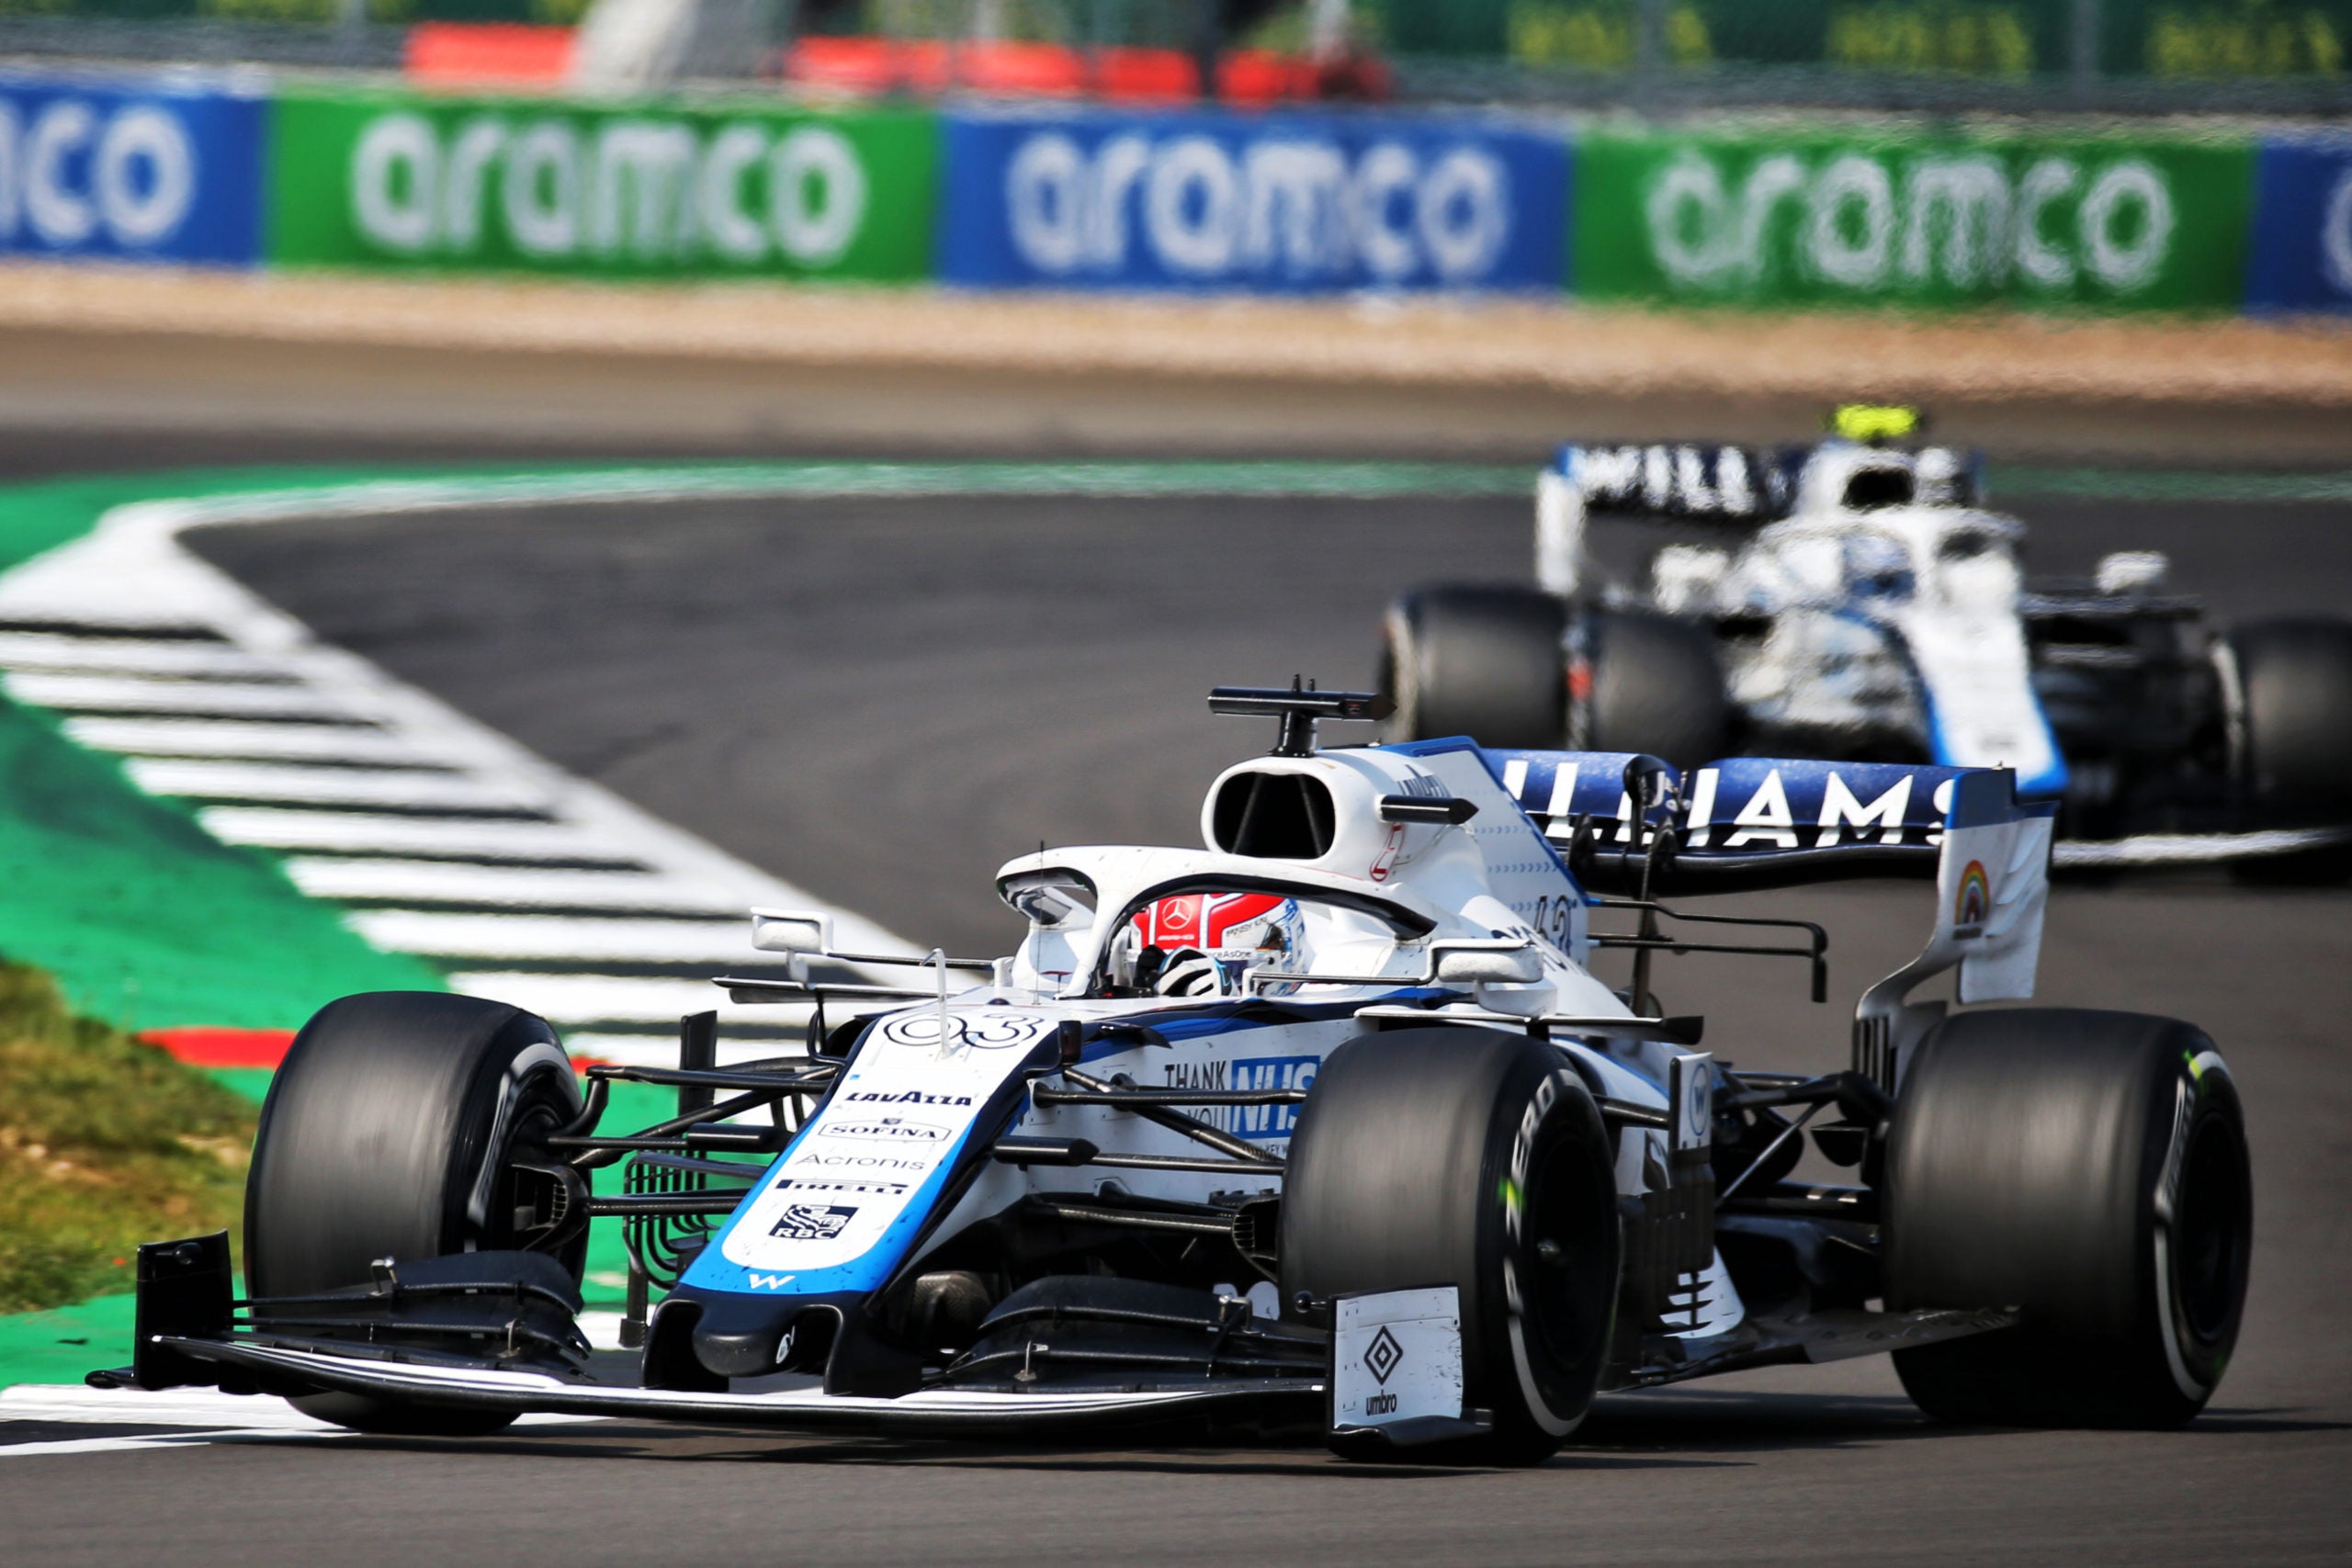 Williams F1 cars navigating through a corner